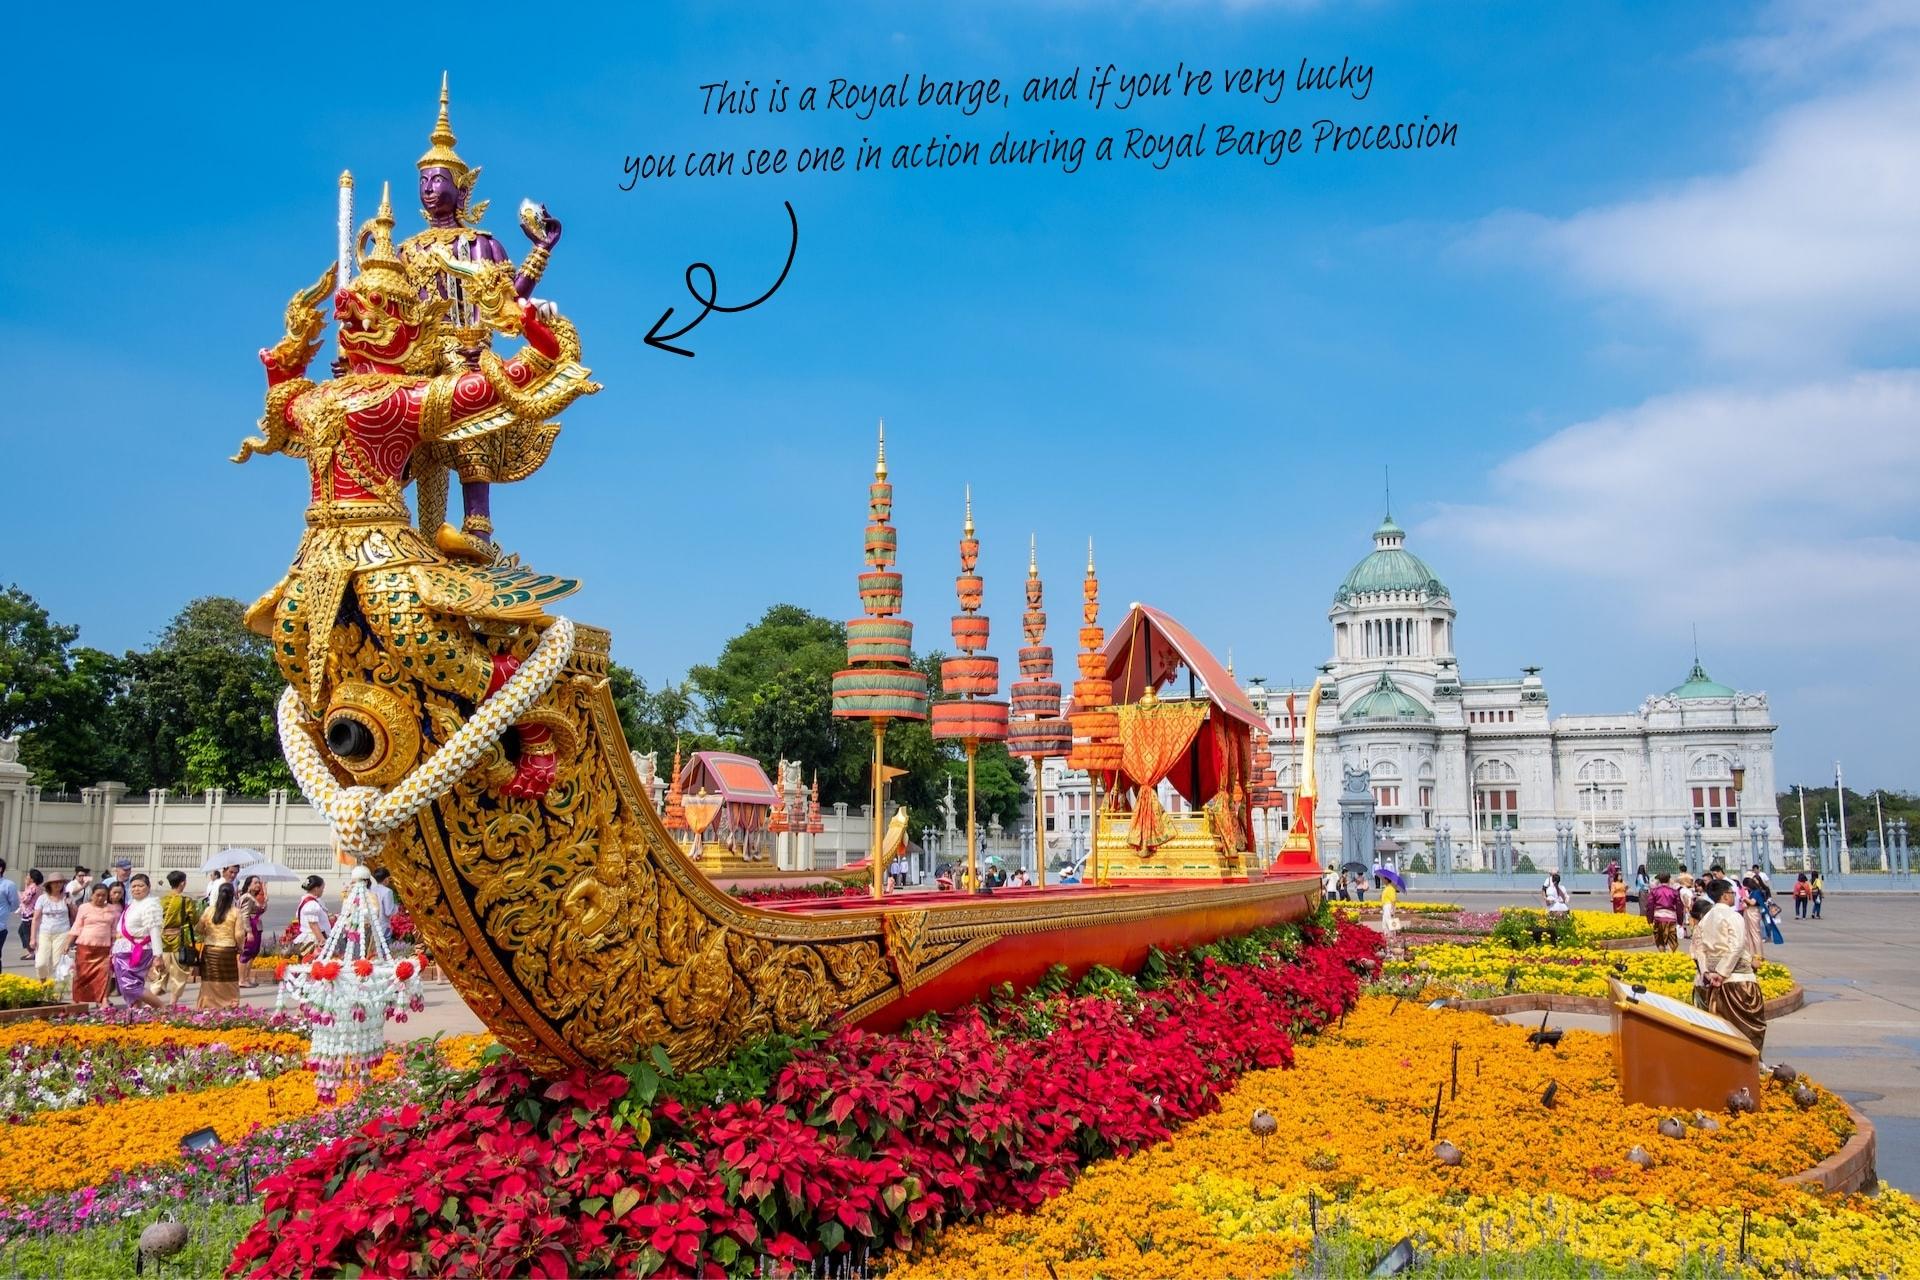 A golden Royal barge in Bangkok.